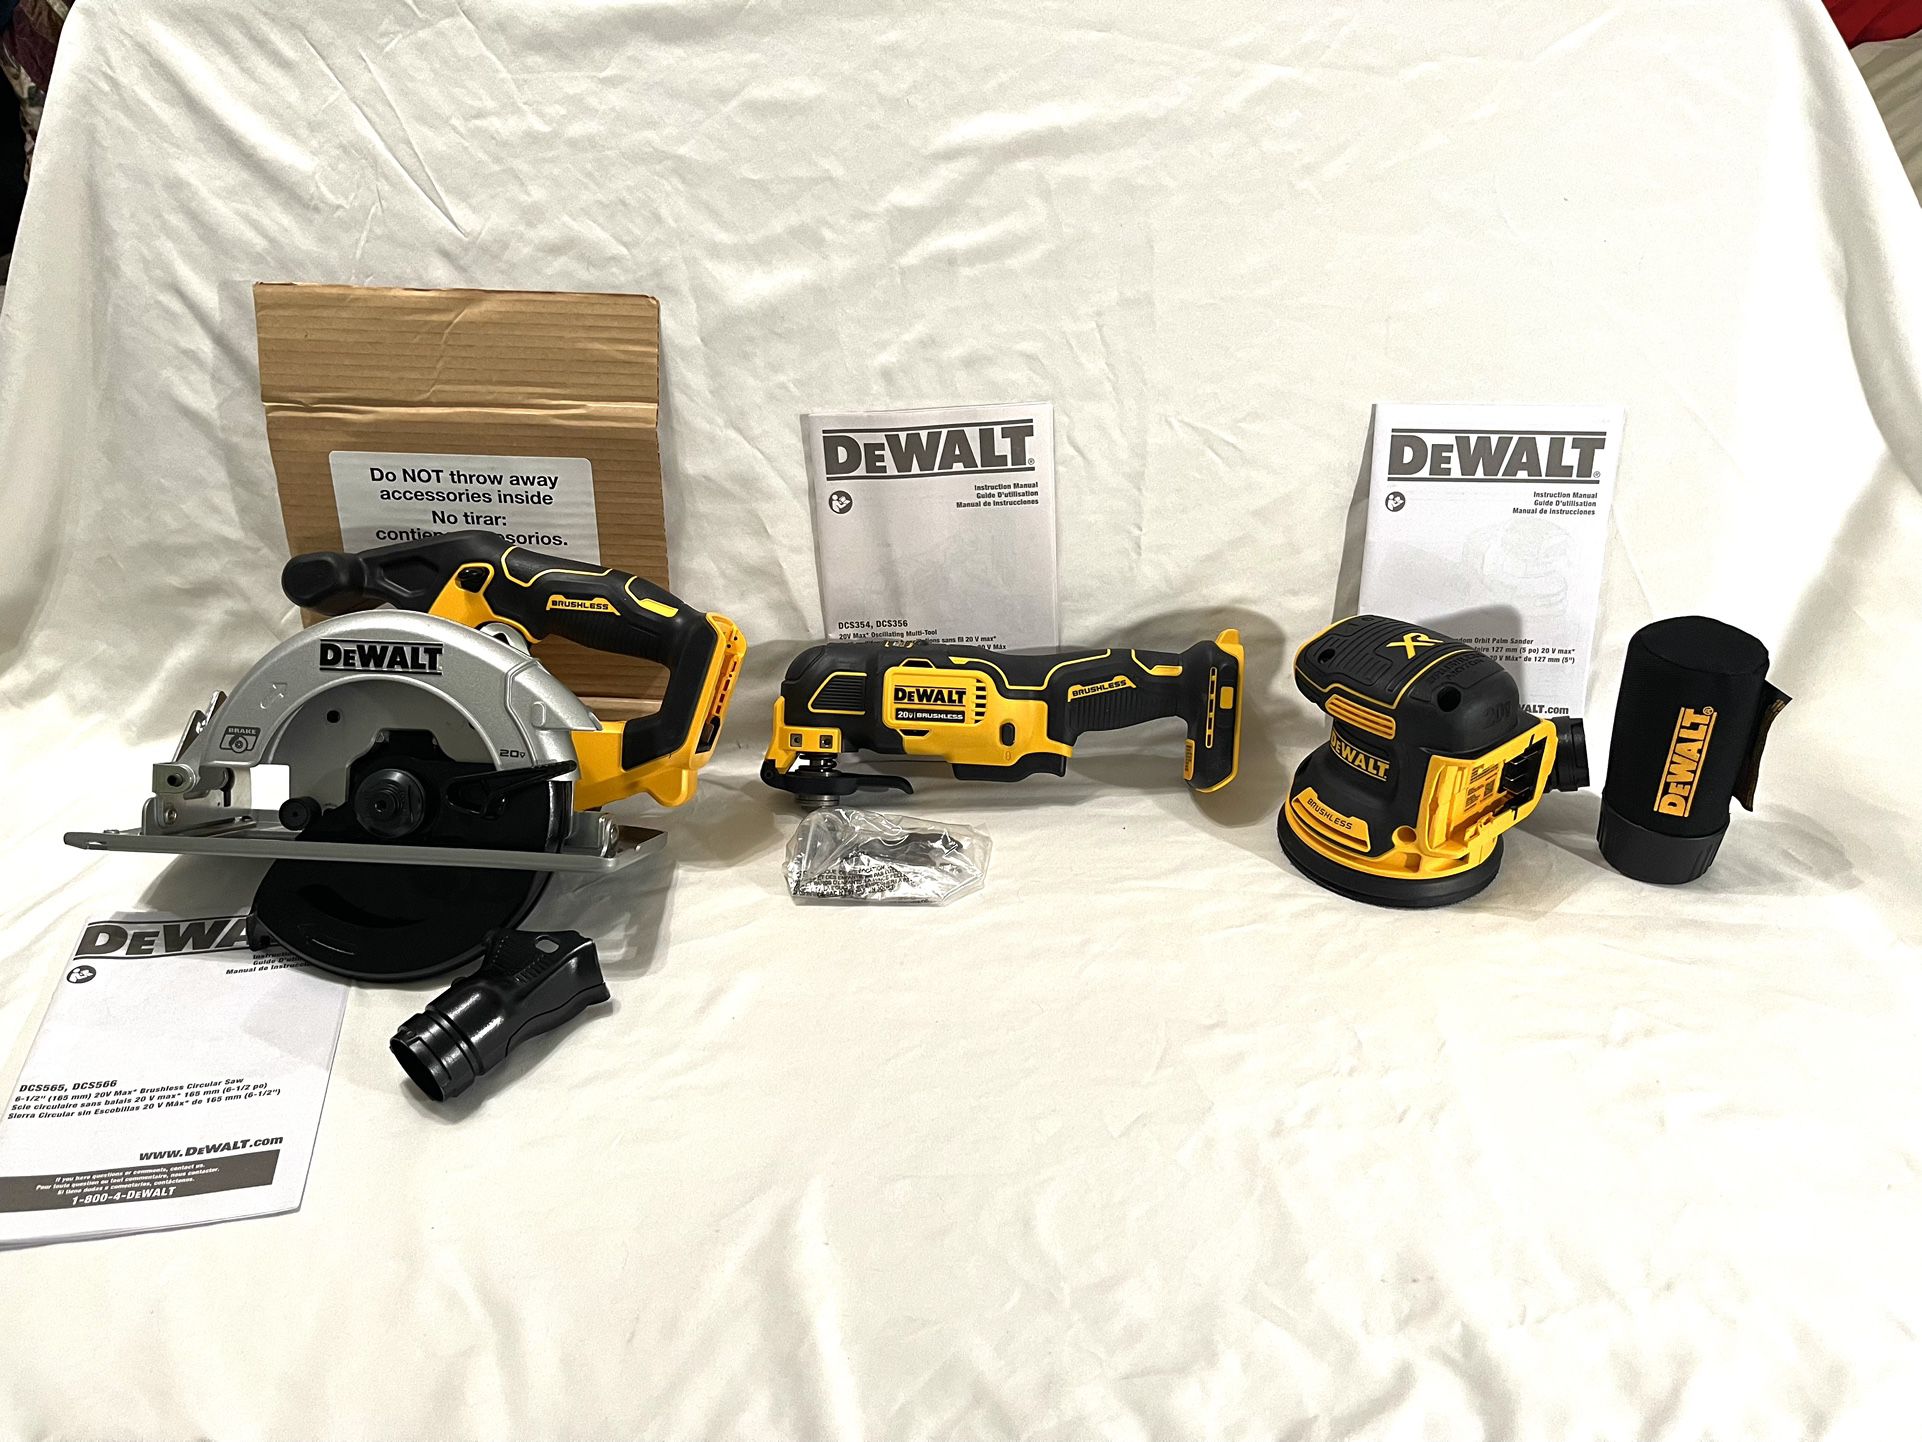 Brand New Dewalt 20V Brushless Mixed Power Tools. Circular Saw, Multitool & Orbital Palm Sander. 